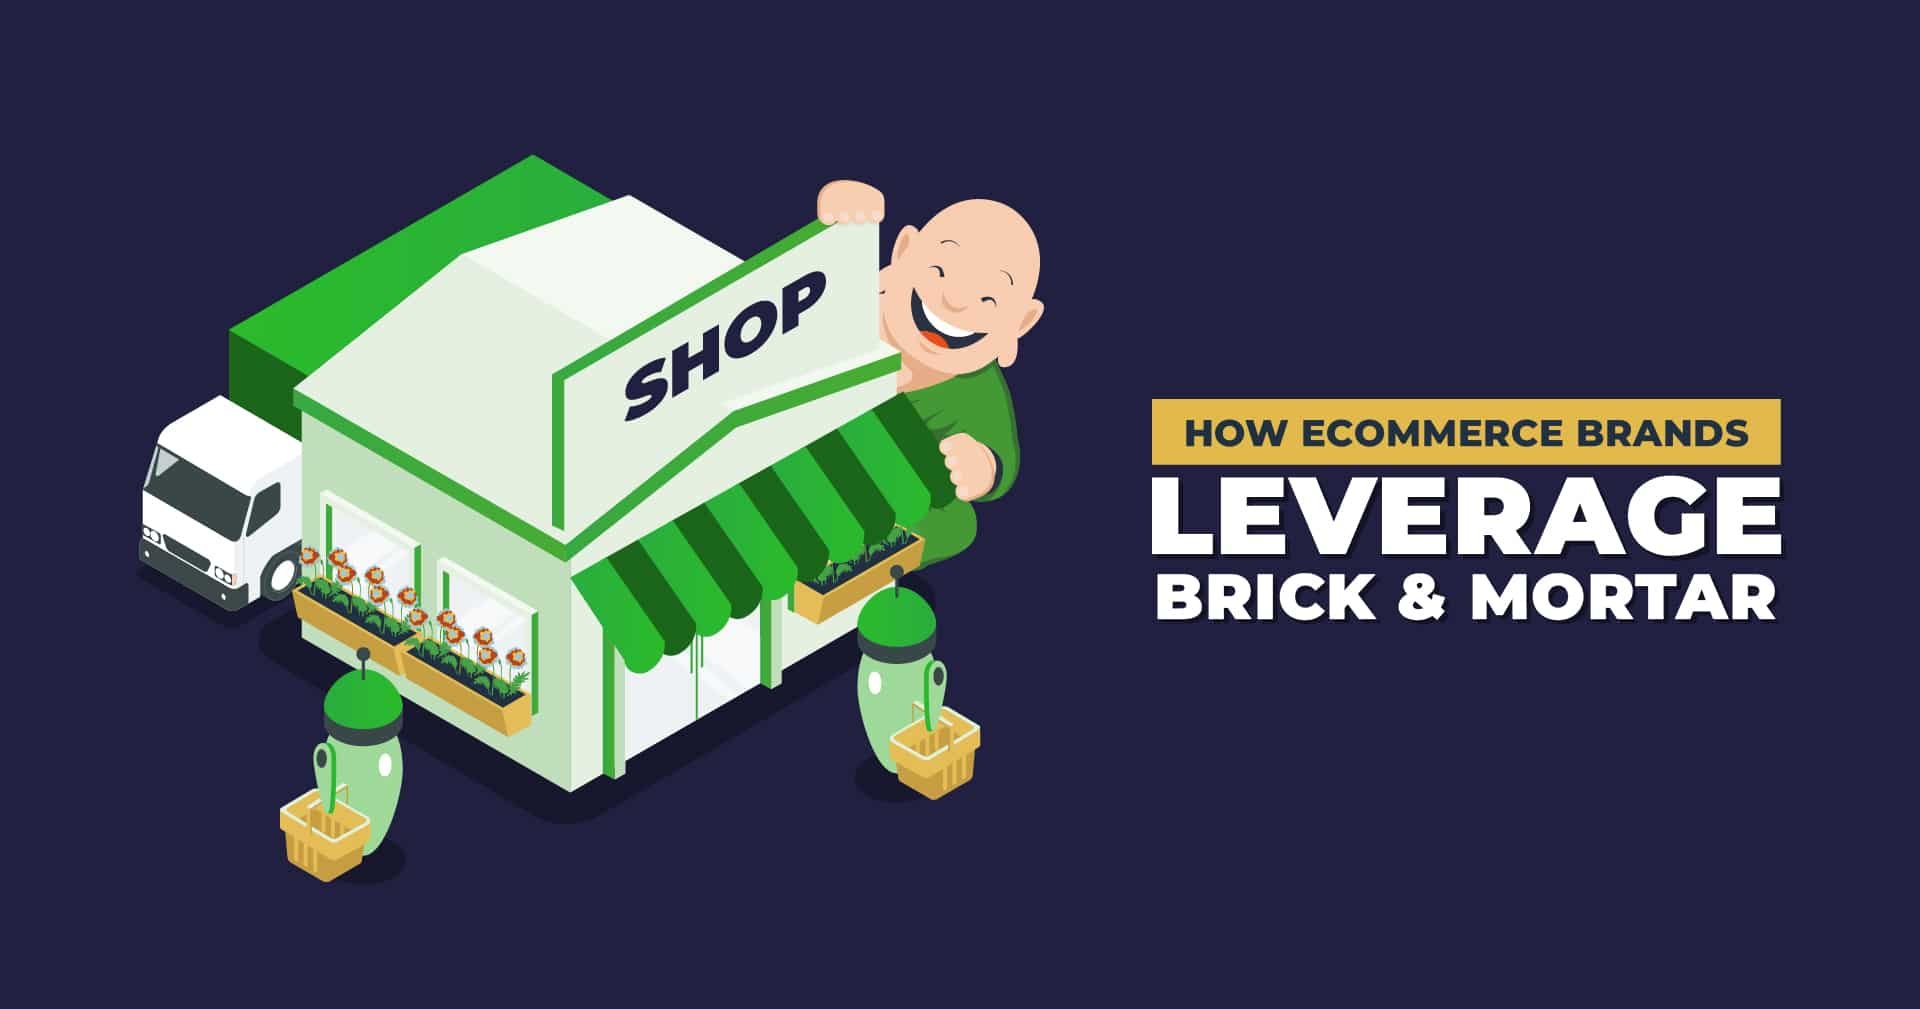 How Ecommerce Brands Leverage Brick & Mortar